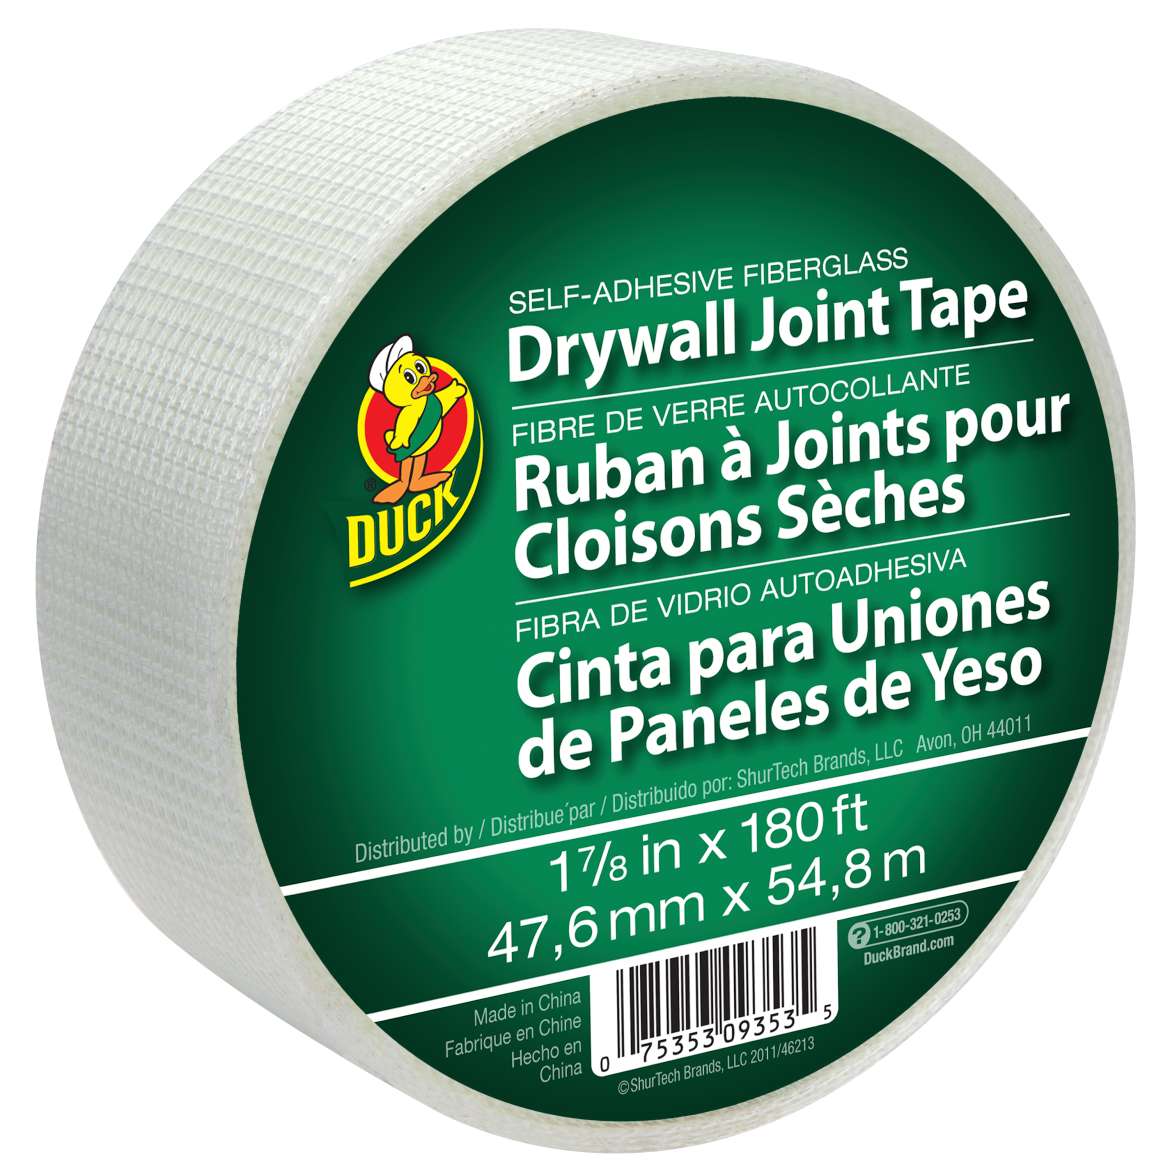 Duck Brand Drywall Joint Self-Adhesive Fiberglass Tape